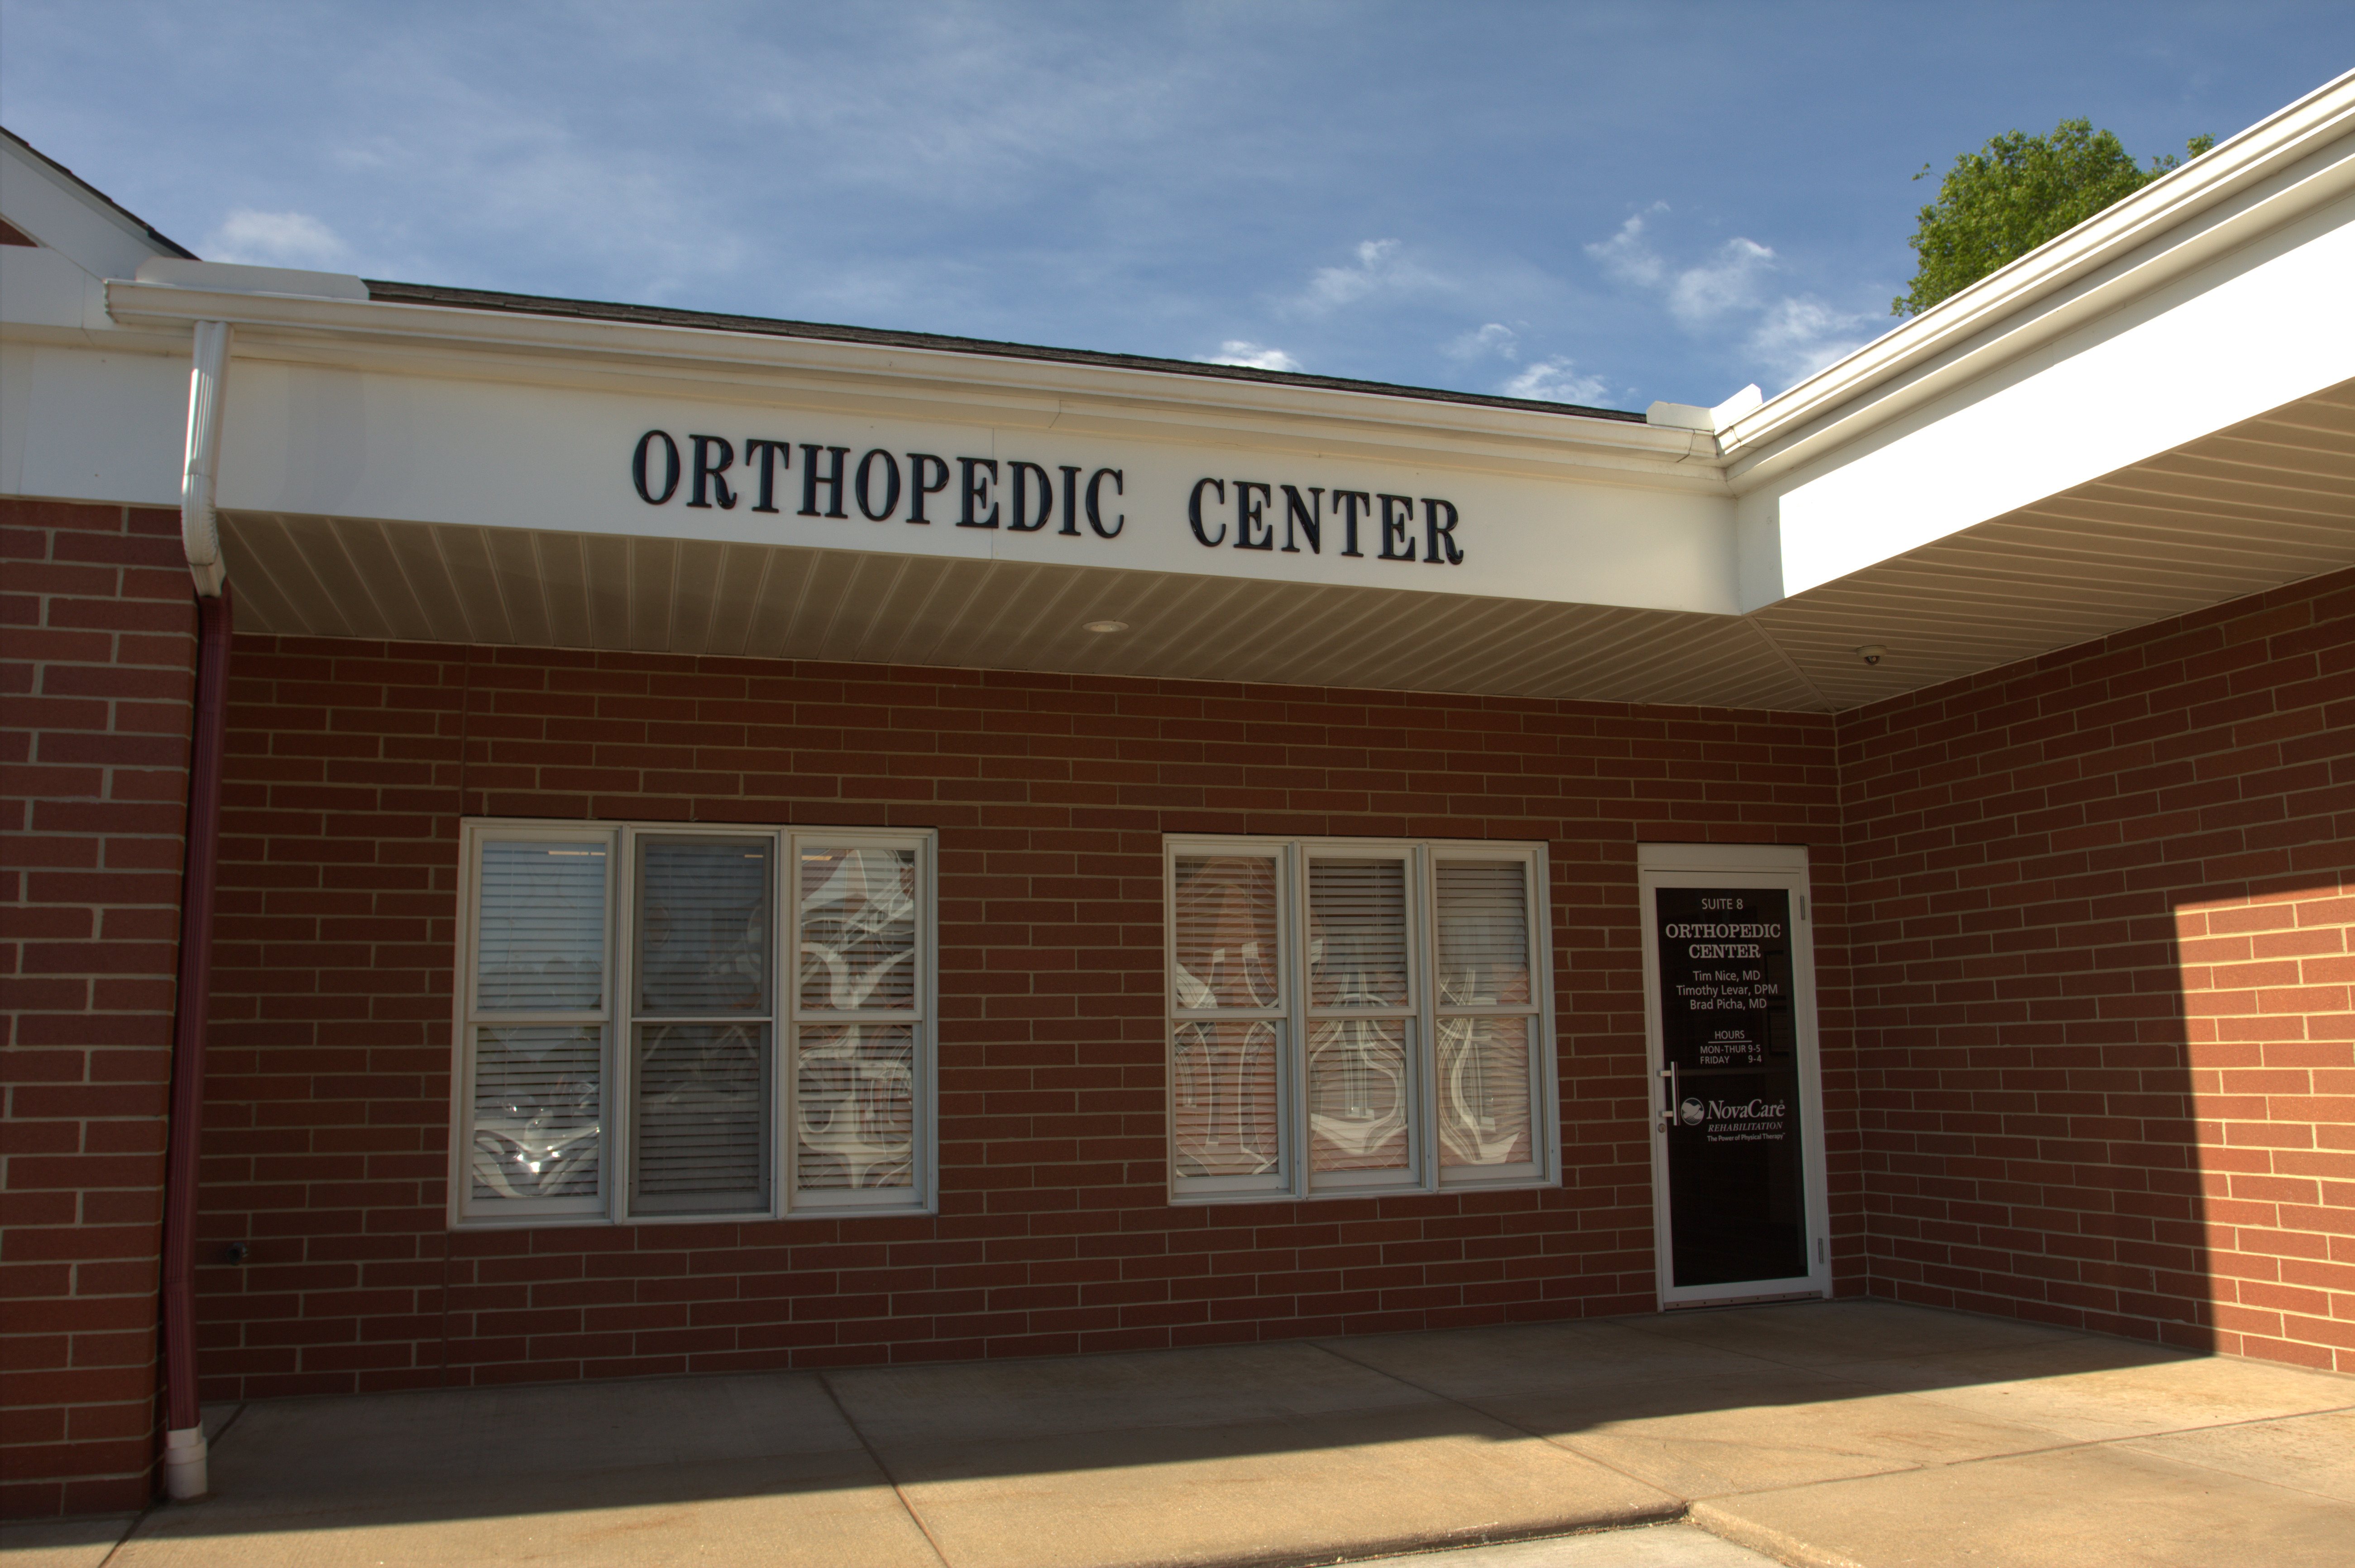 Exterior of Orthopedic Center